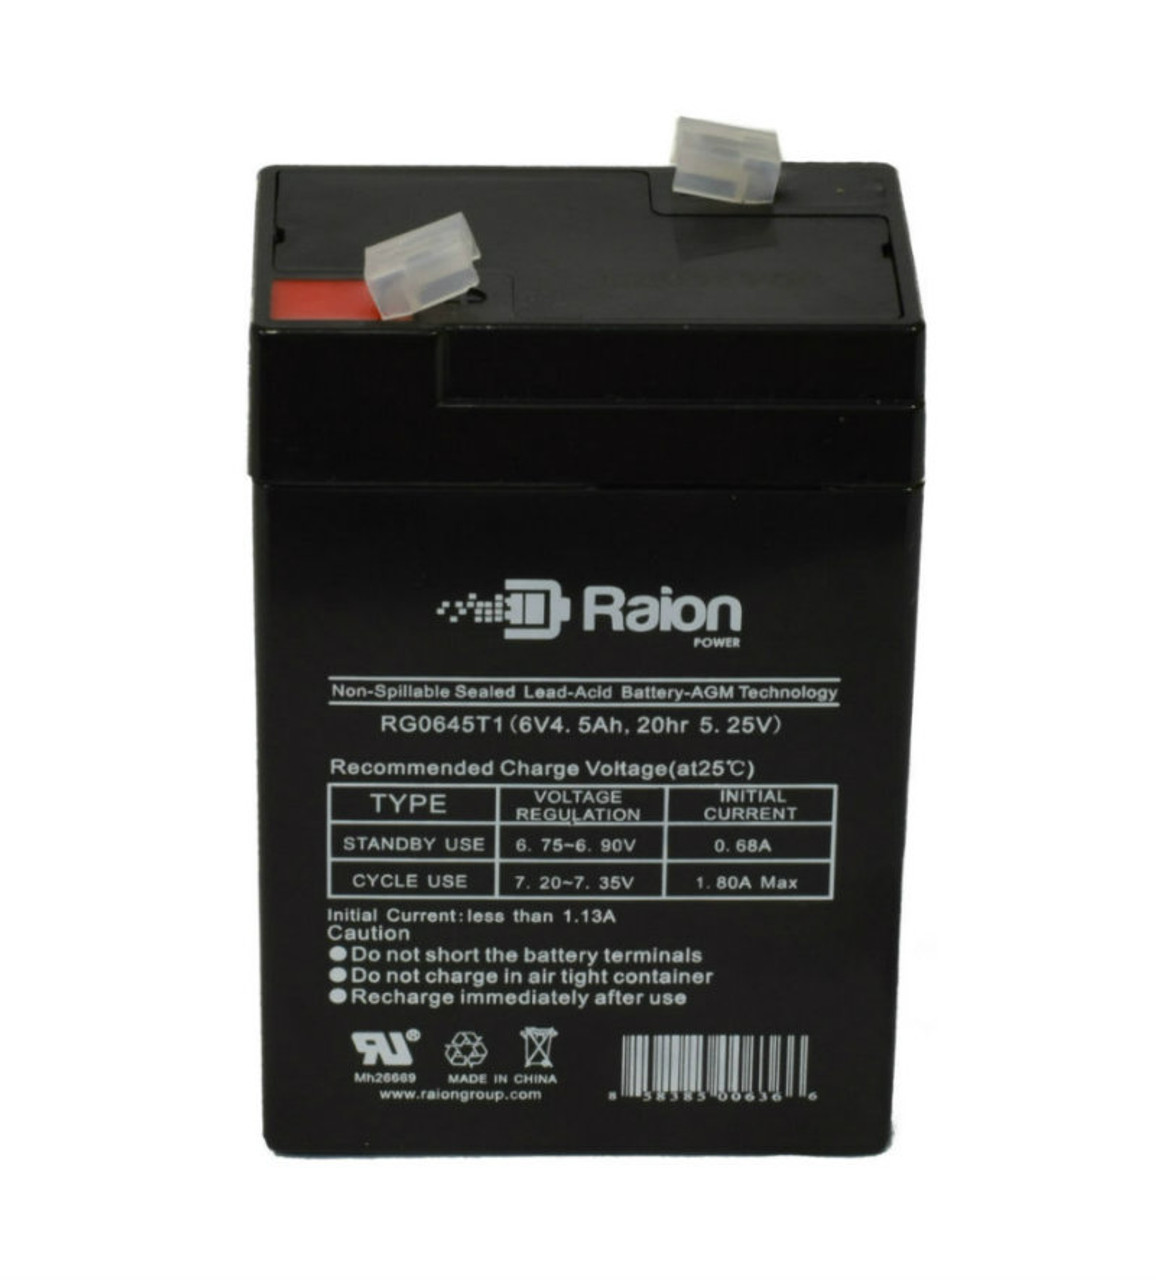 Raion Power RG0645T1 Replacement Battery Cartridge for Unikor MxVolta VT604